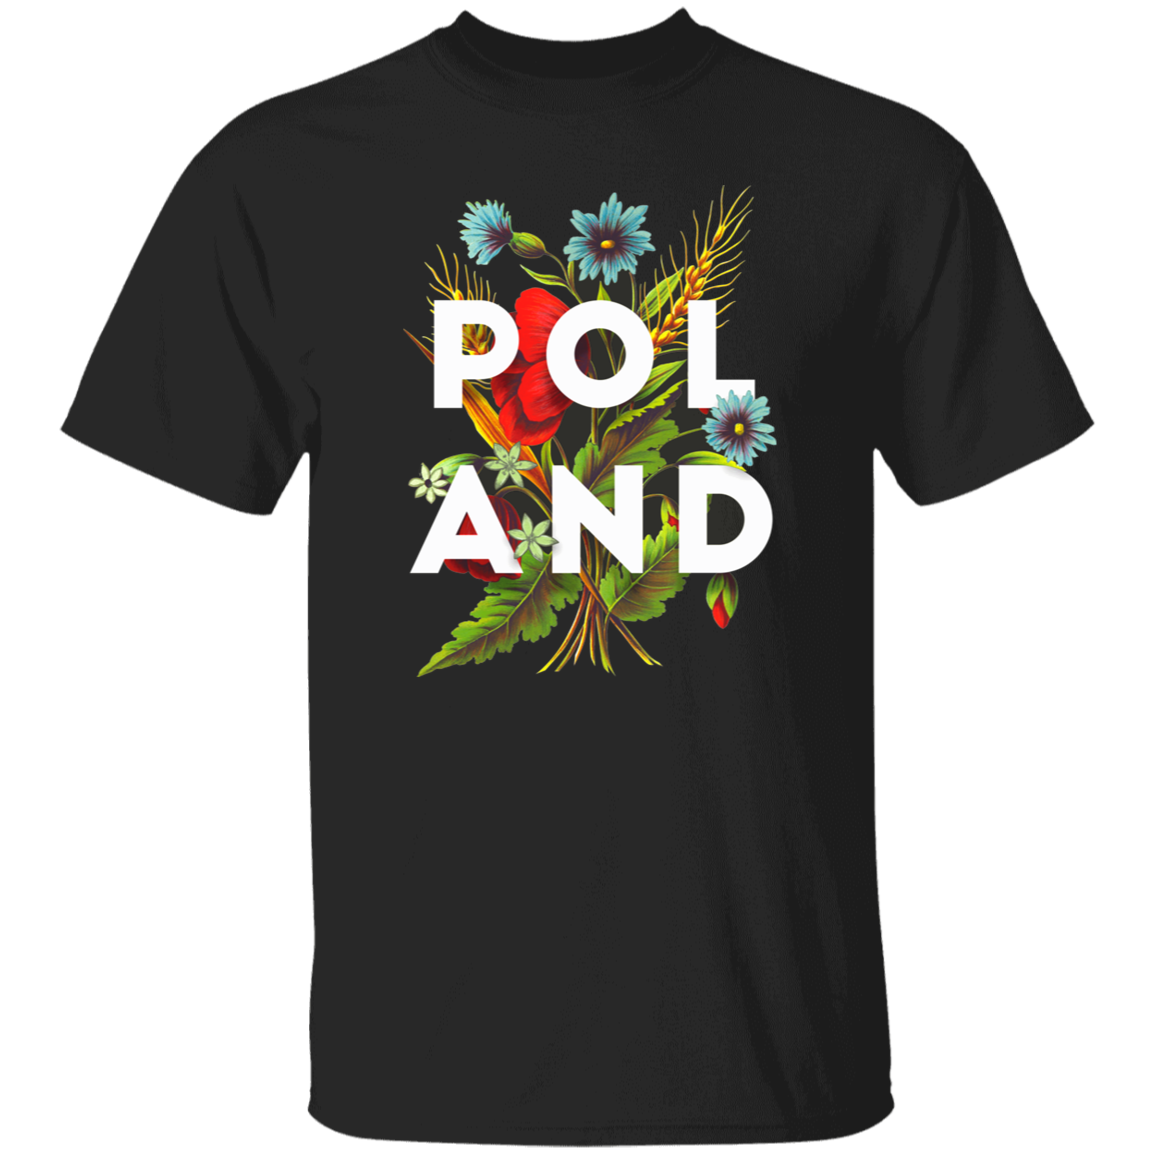 Poland Flowers Apparel CustomCat G500 5.3 oz. T-Shirt Black S